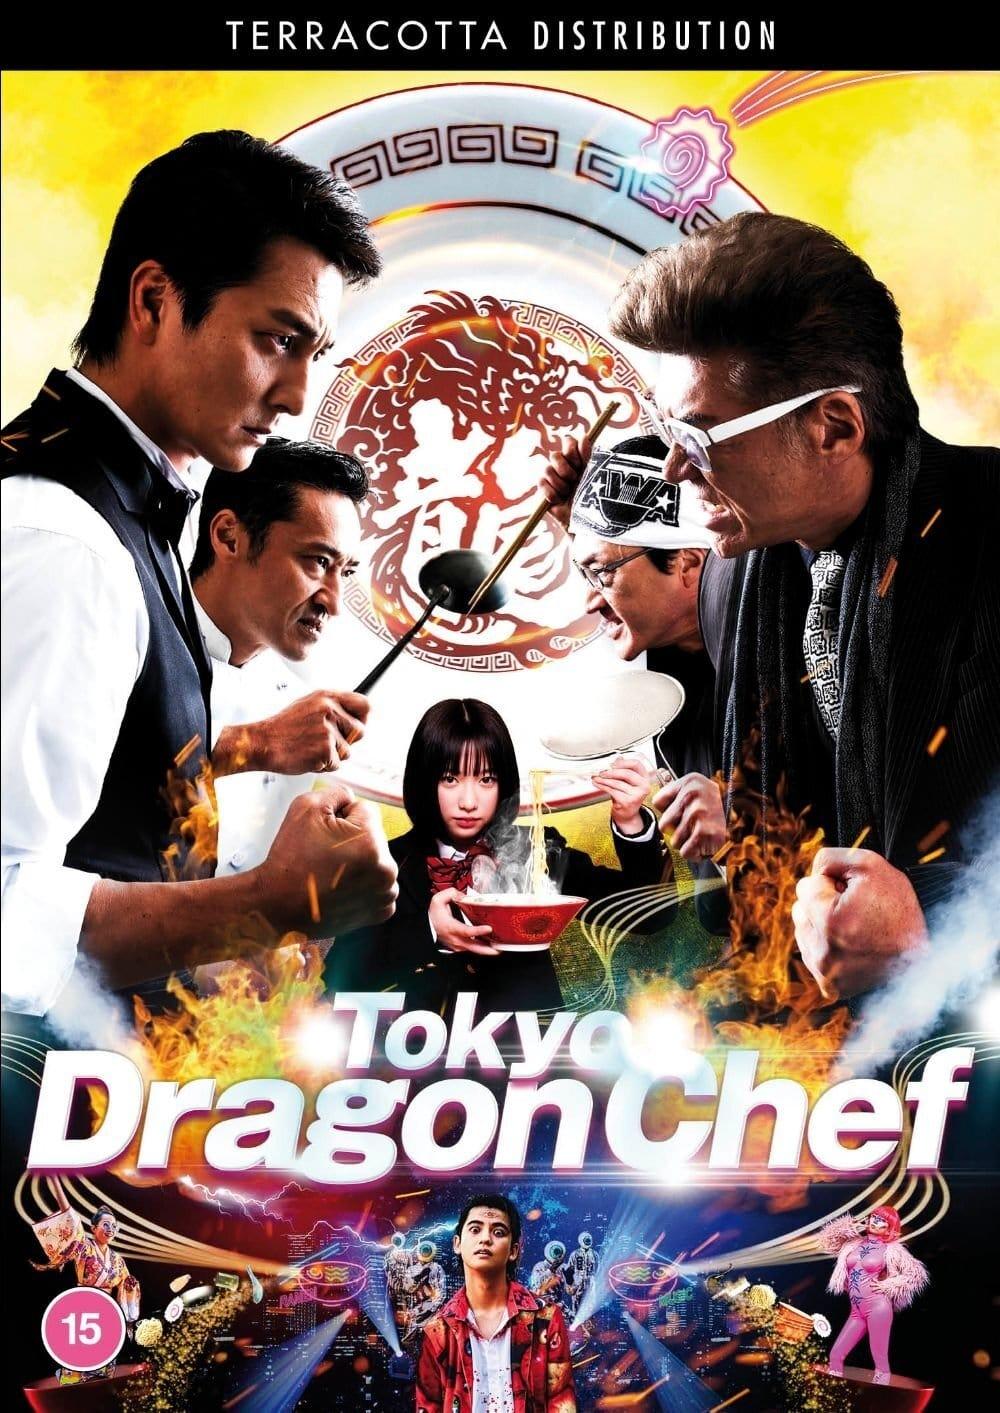 Tokyo Dragon Chef poster